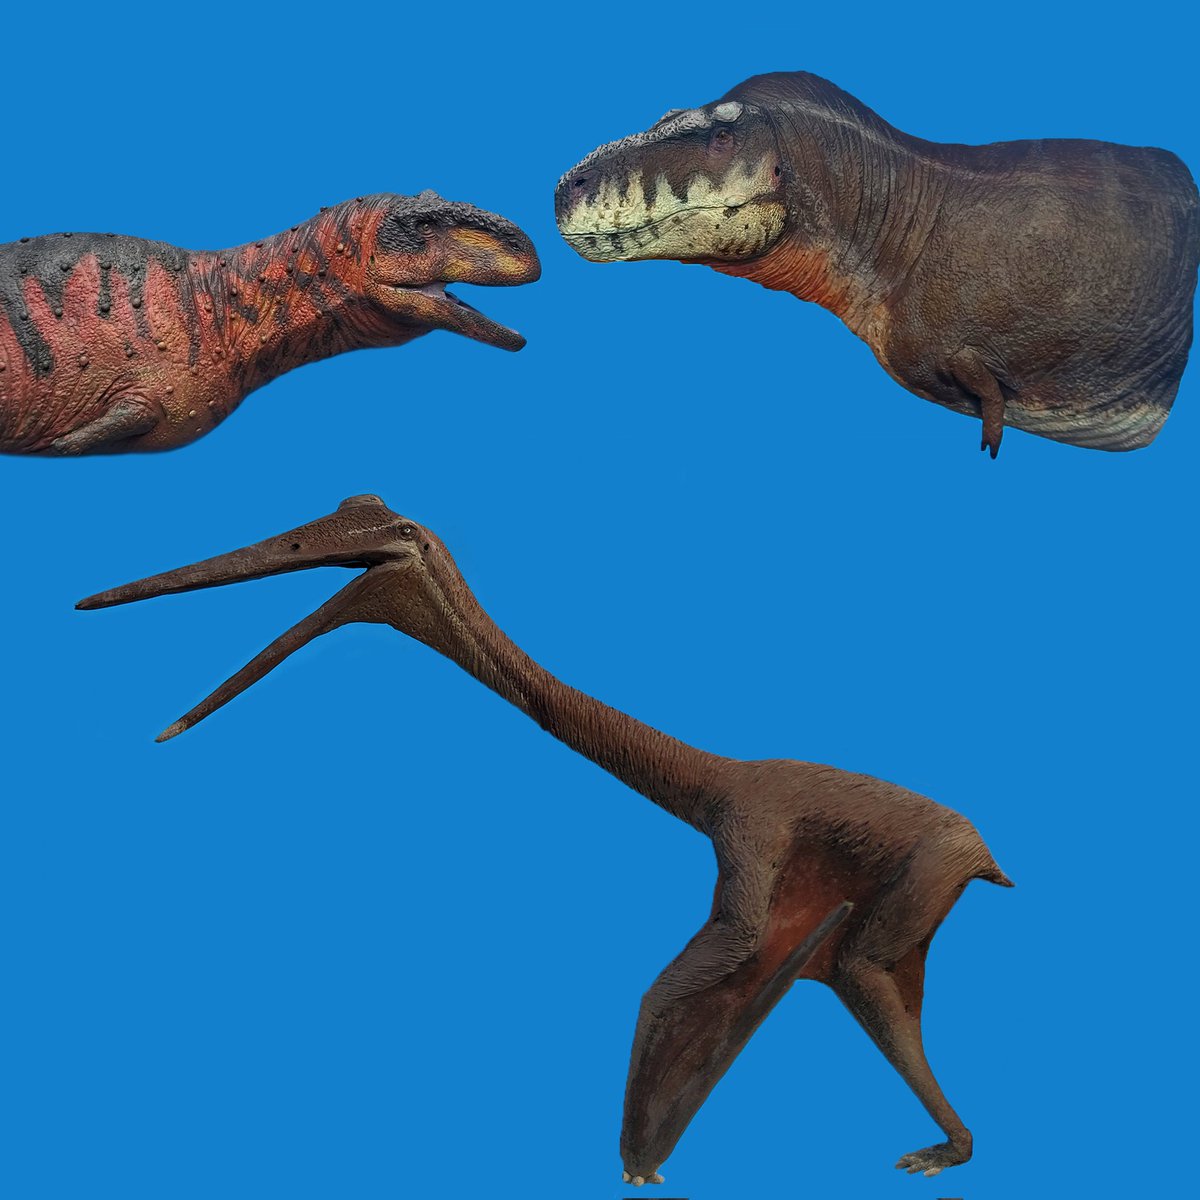 The sculptures of #PrehistoricPlanet2 that I have done
#Quetzalcoatlus  #Tyrannosaurusrex #Rajasaurus 
#handmadedinosaur #PrehistoricPlanet  #prehistoricplanetseason2 #walkingwithdinosaurs #azdarchid #trex #dinosaur #dinosaurs #dino #dinosaurios #dinosaurio #dinosaursculpture